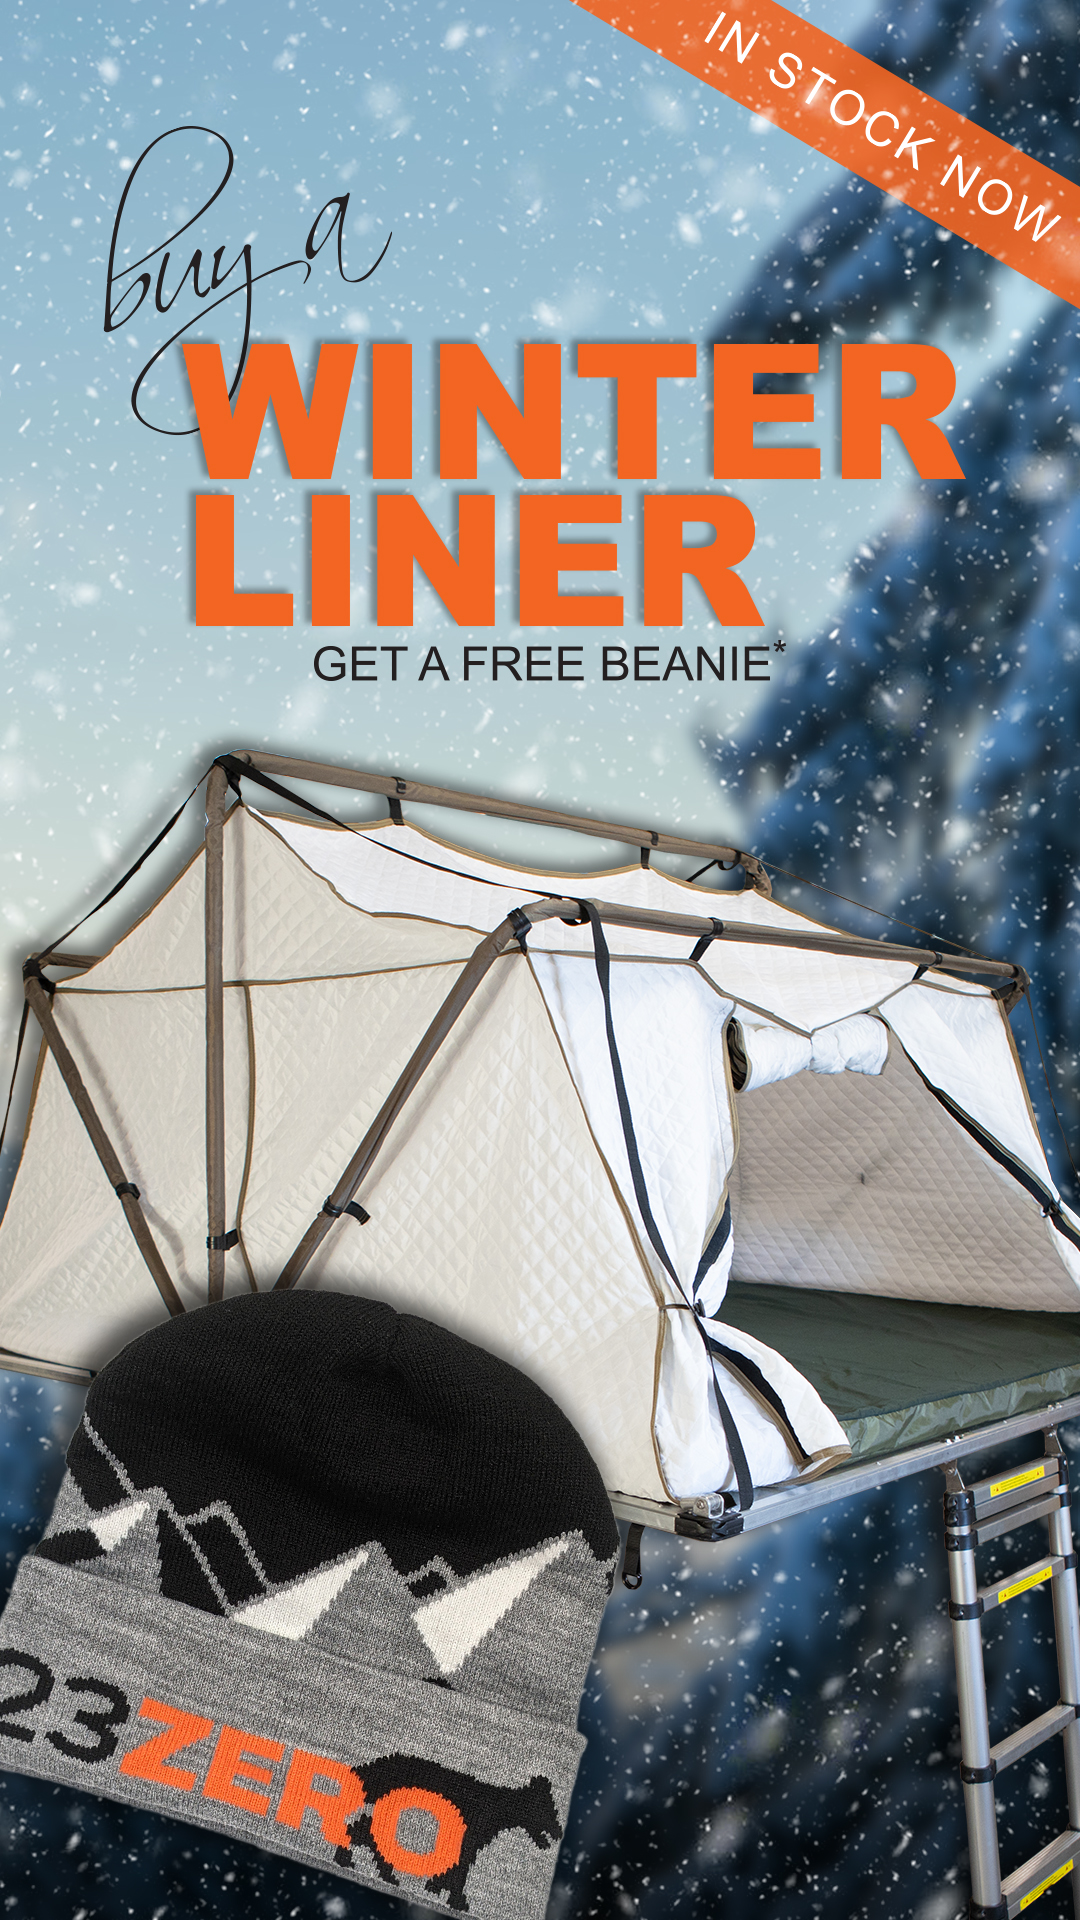 23zero soft-shell RRT Winter Liner 4- season tent